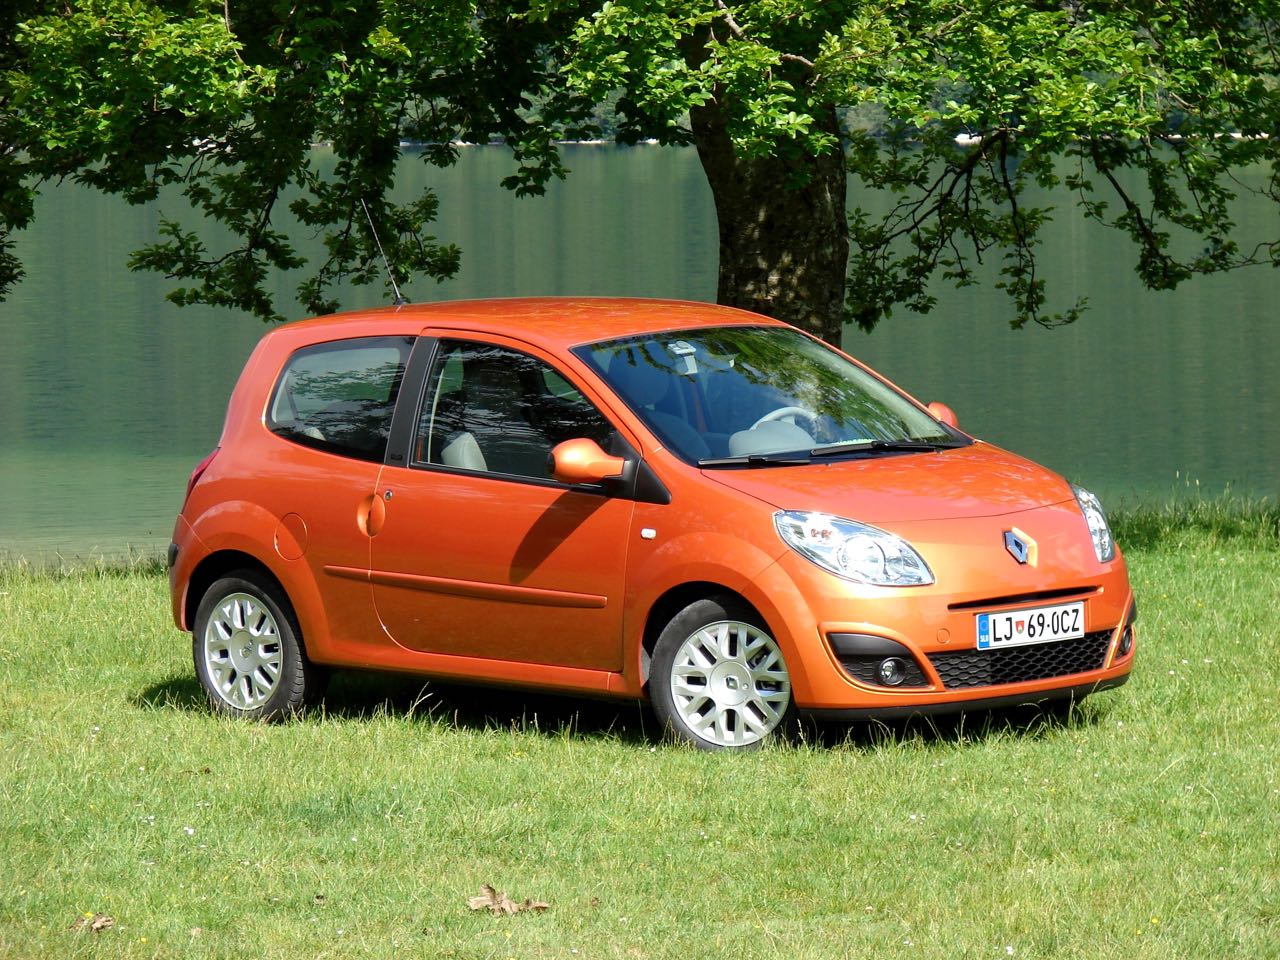 Renault Twingo 2007 naranja